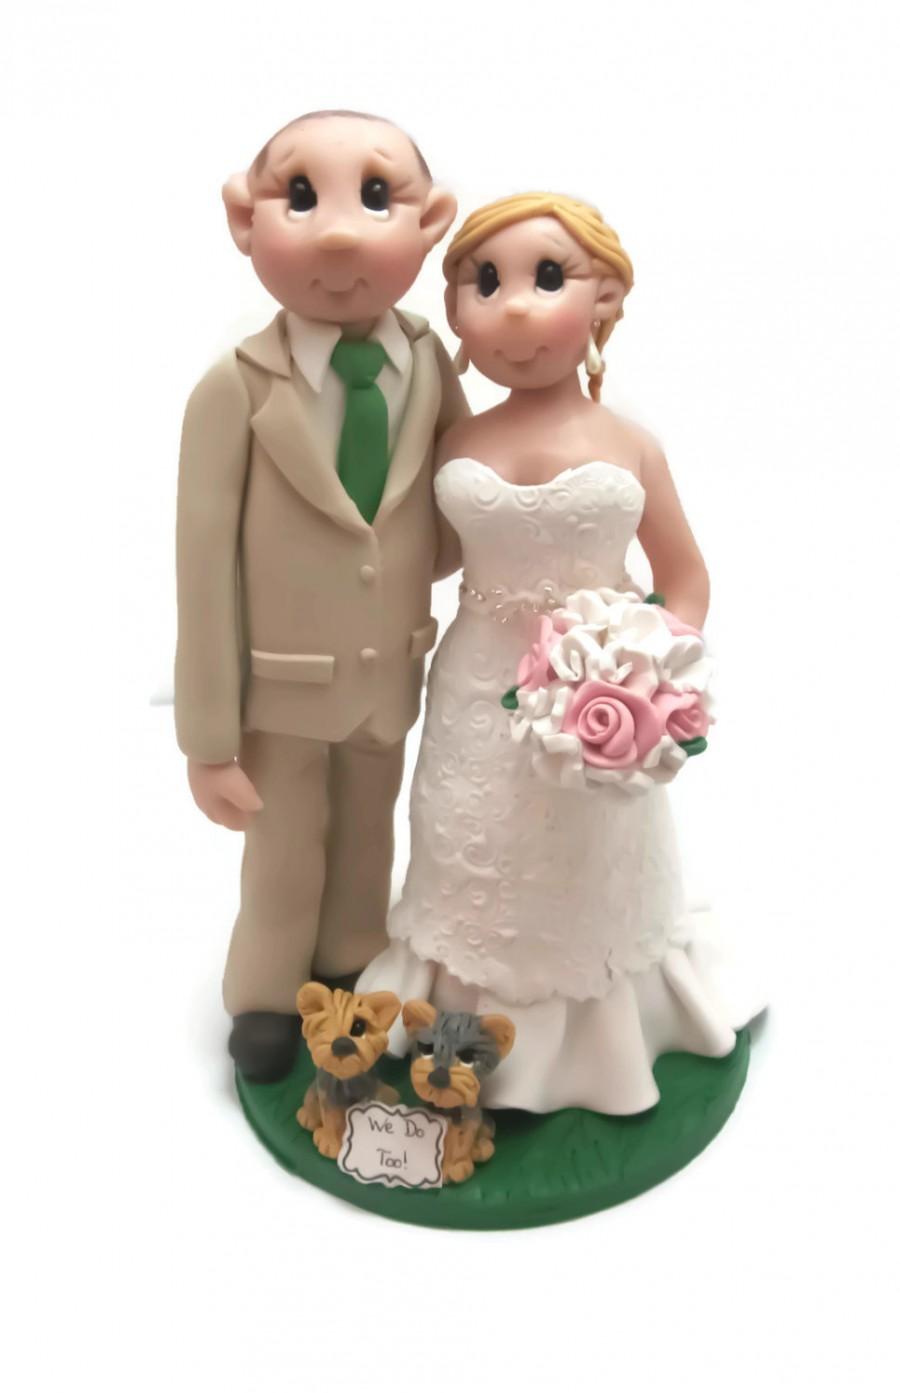 Wedding - Custom wedding cake topper, pet lovers wedding cake topper, Bride and groom cake topper, Mr and Mrs cake topper, personalized cake topper